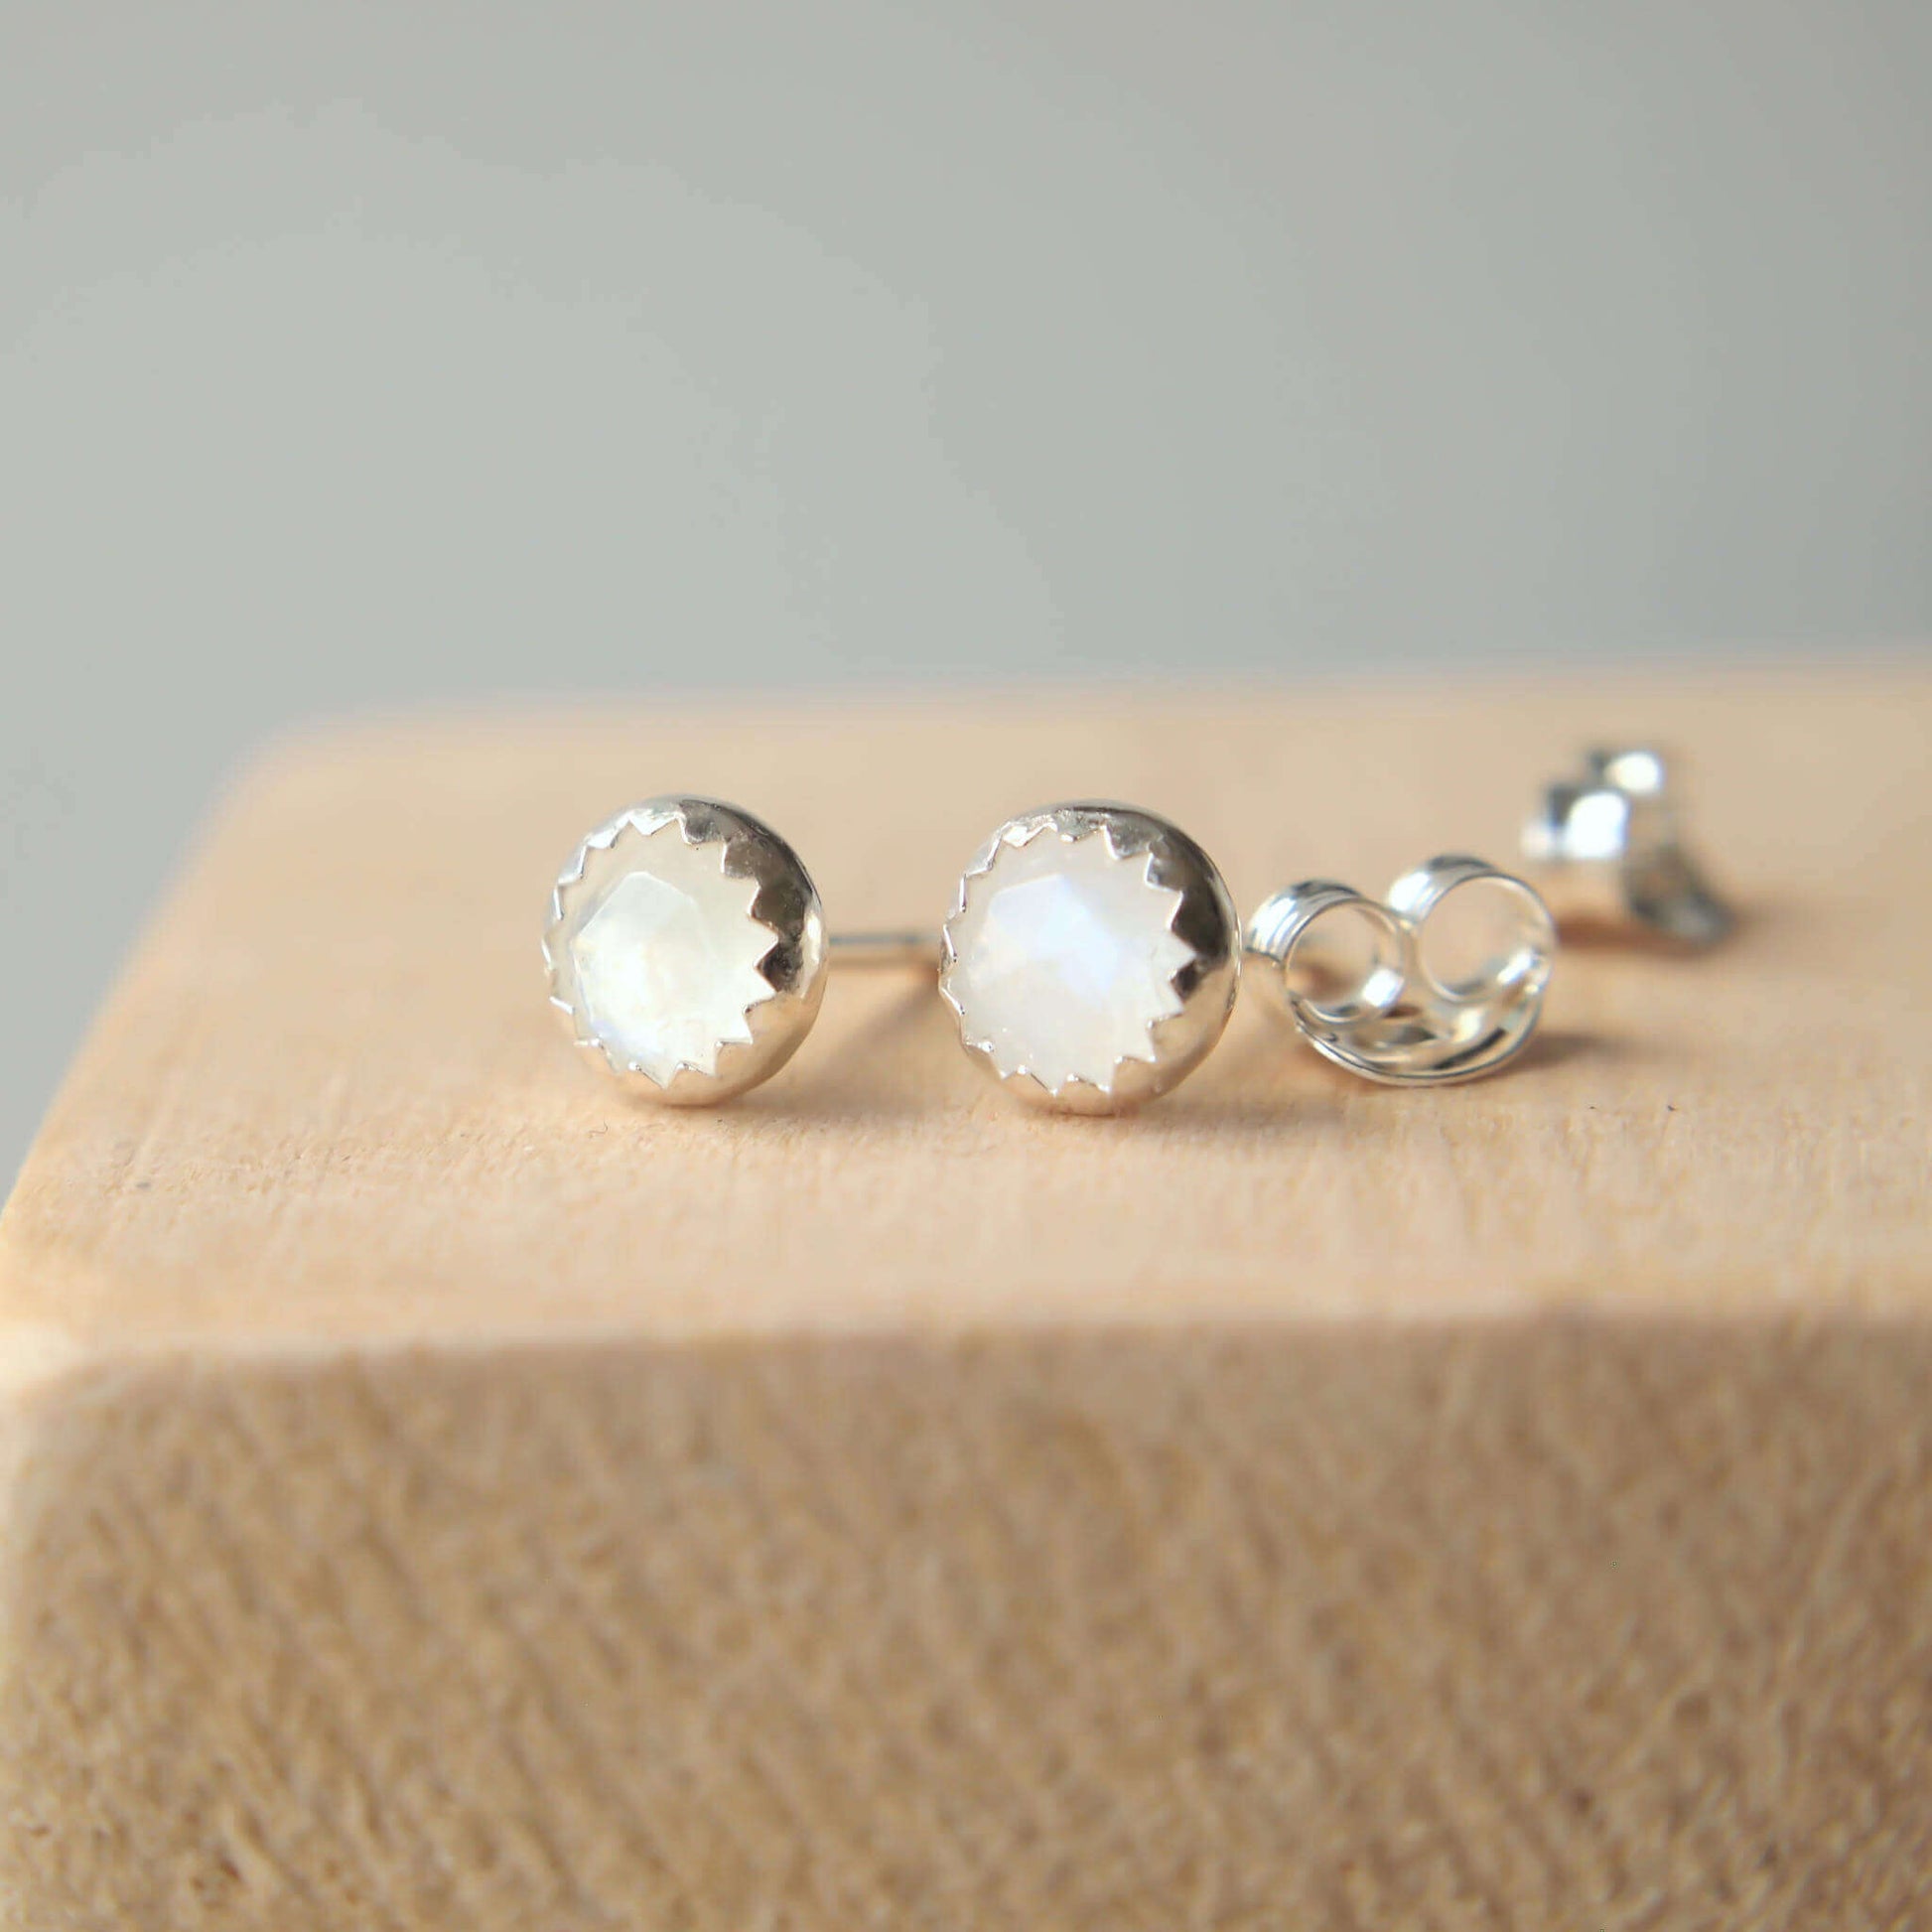 White moonstone simple Silver and gemstone earrings in a simple sterling silver setting, Birthstone for June handmade by maram jewellery in Edinburgh Scotland UK